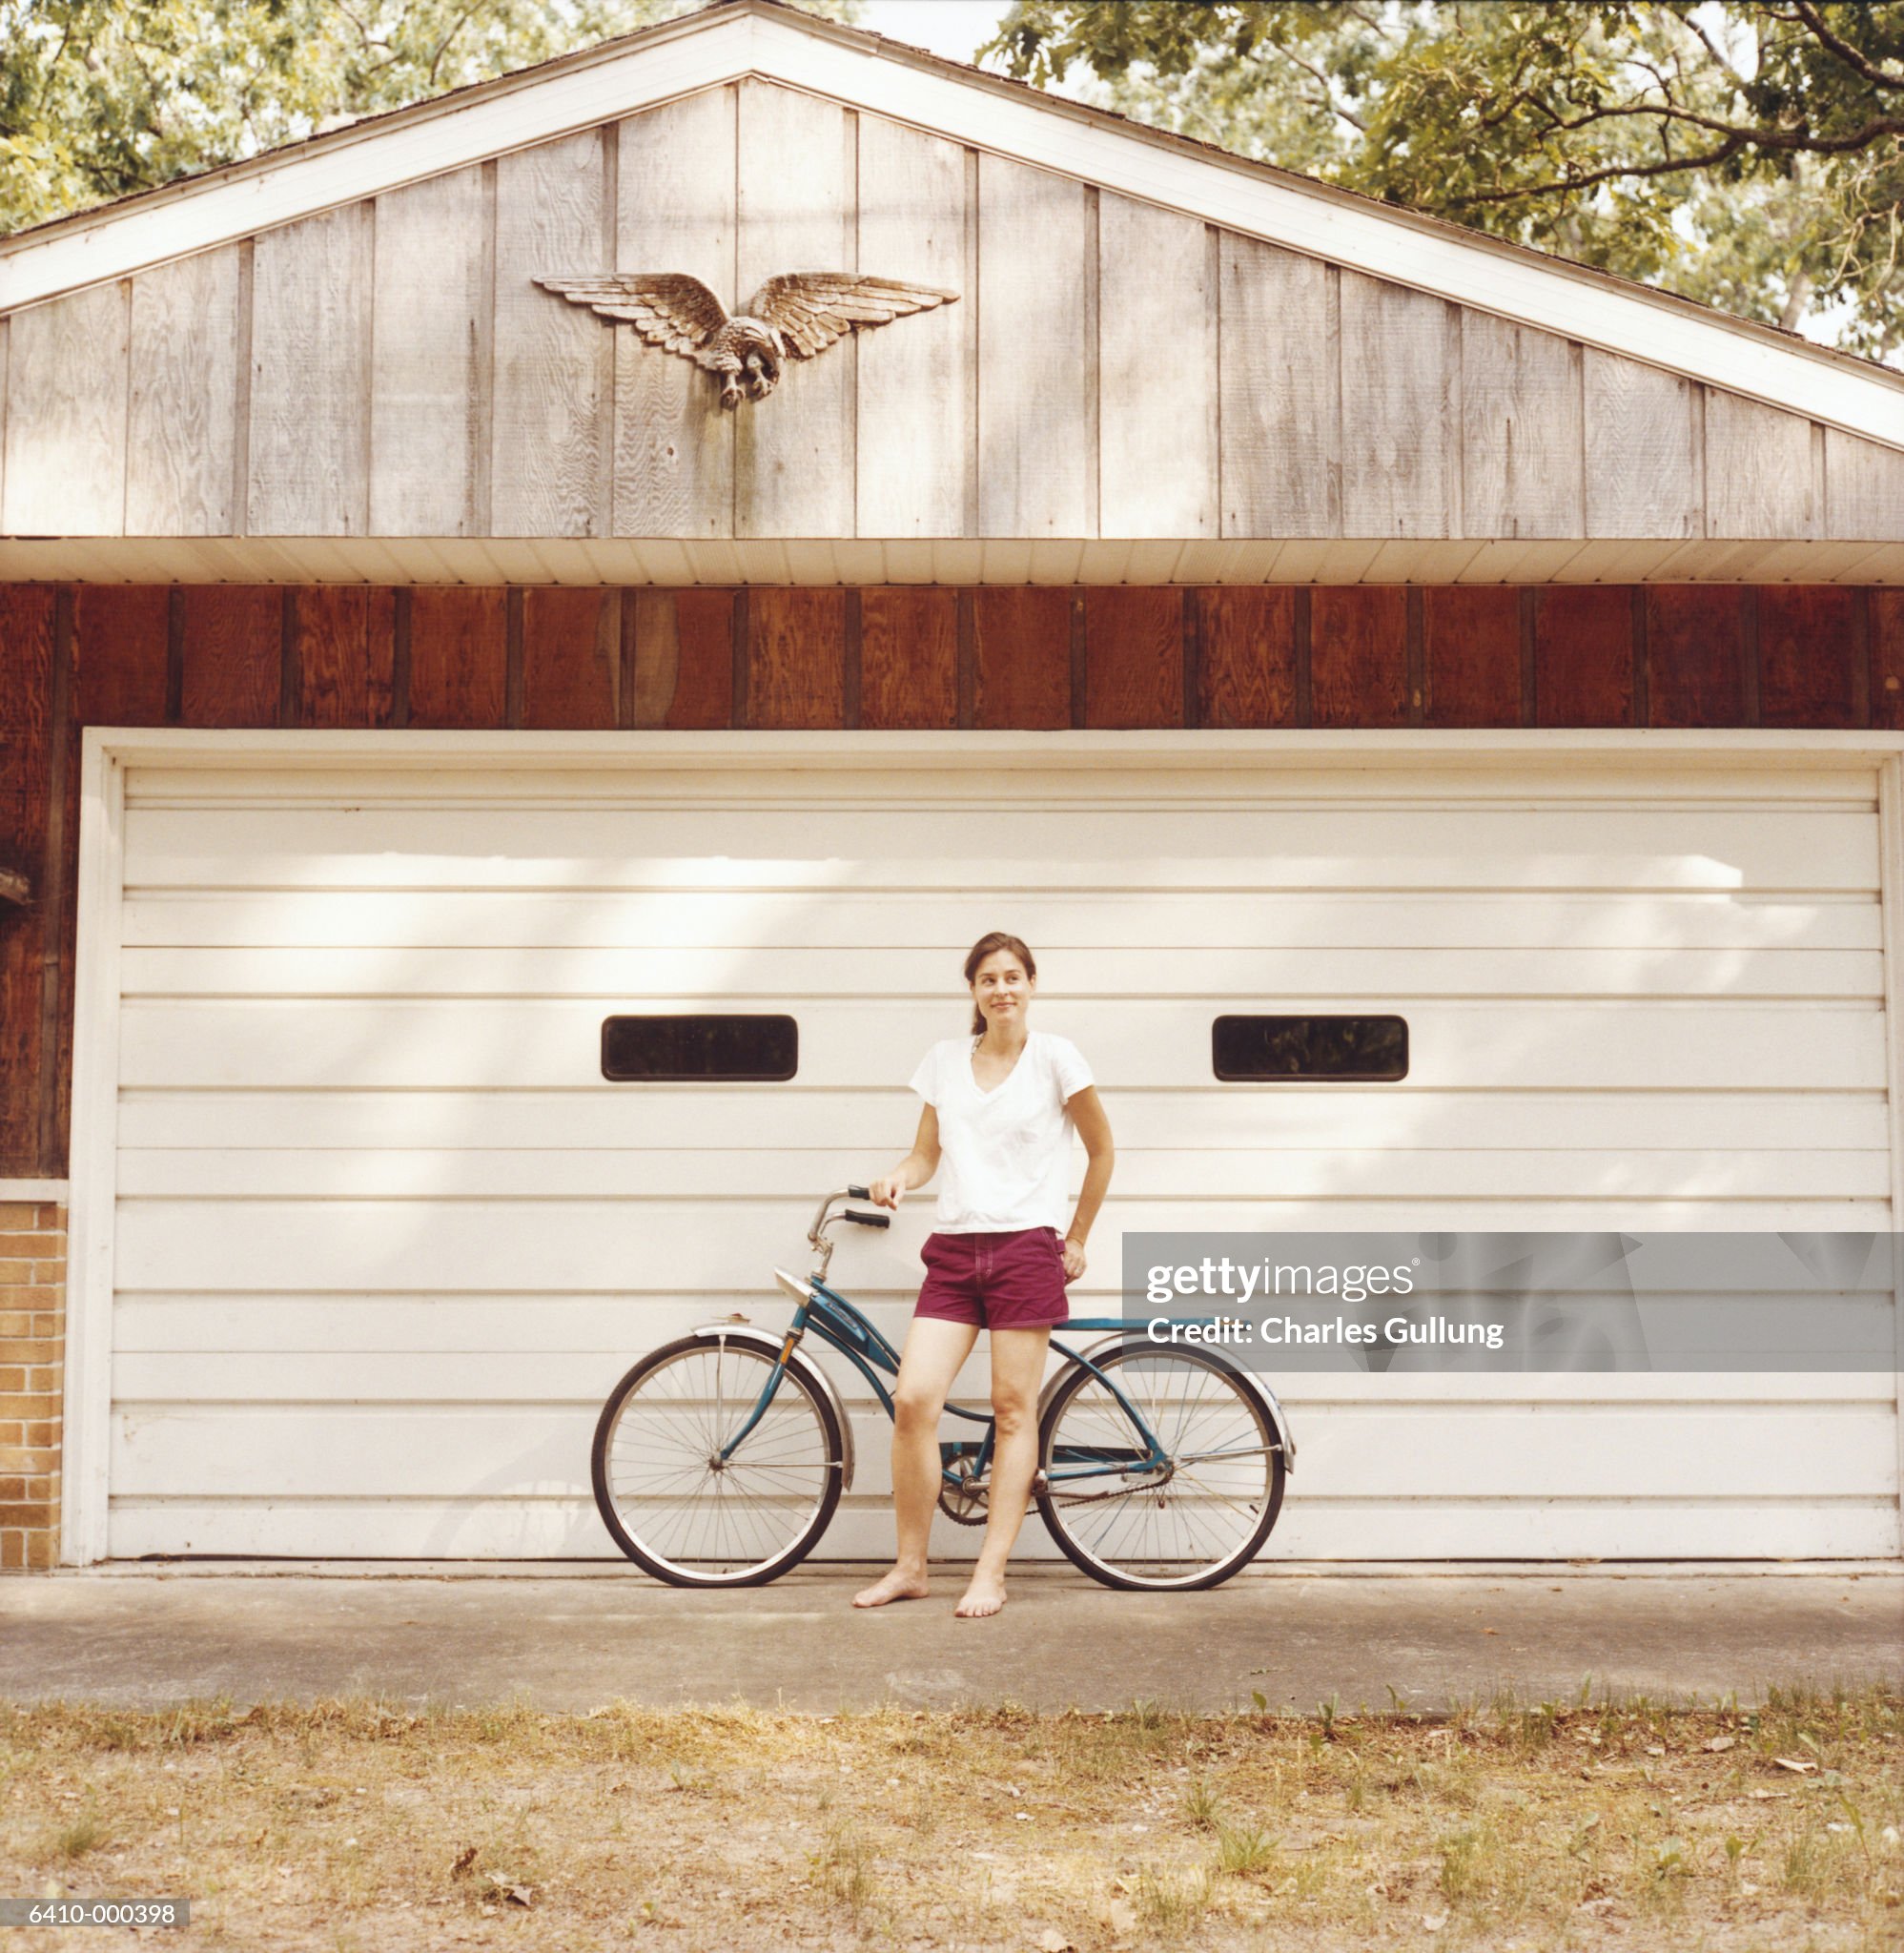 https://media.gettyimages.com/id/6410-000398/photo/woman-with-bike-near-garage.jpg?s=2048x2048&amp;w=gi&amp;k=20&amp;c=DdwxXT5b495aPM6QmiwBOSsBeT_6TNJjl_5dHFl4294=